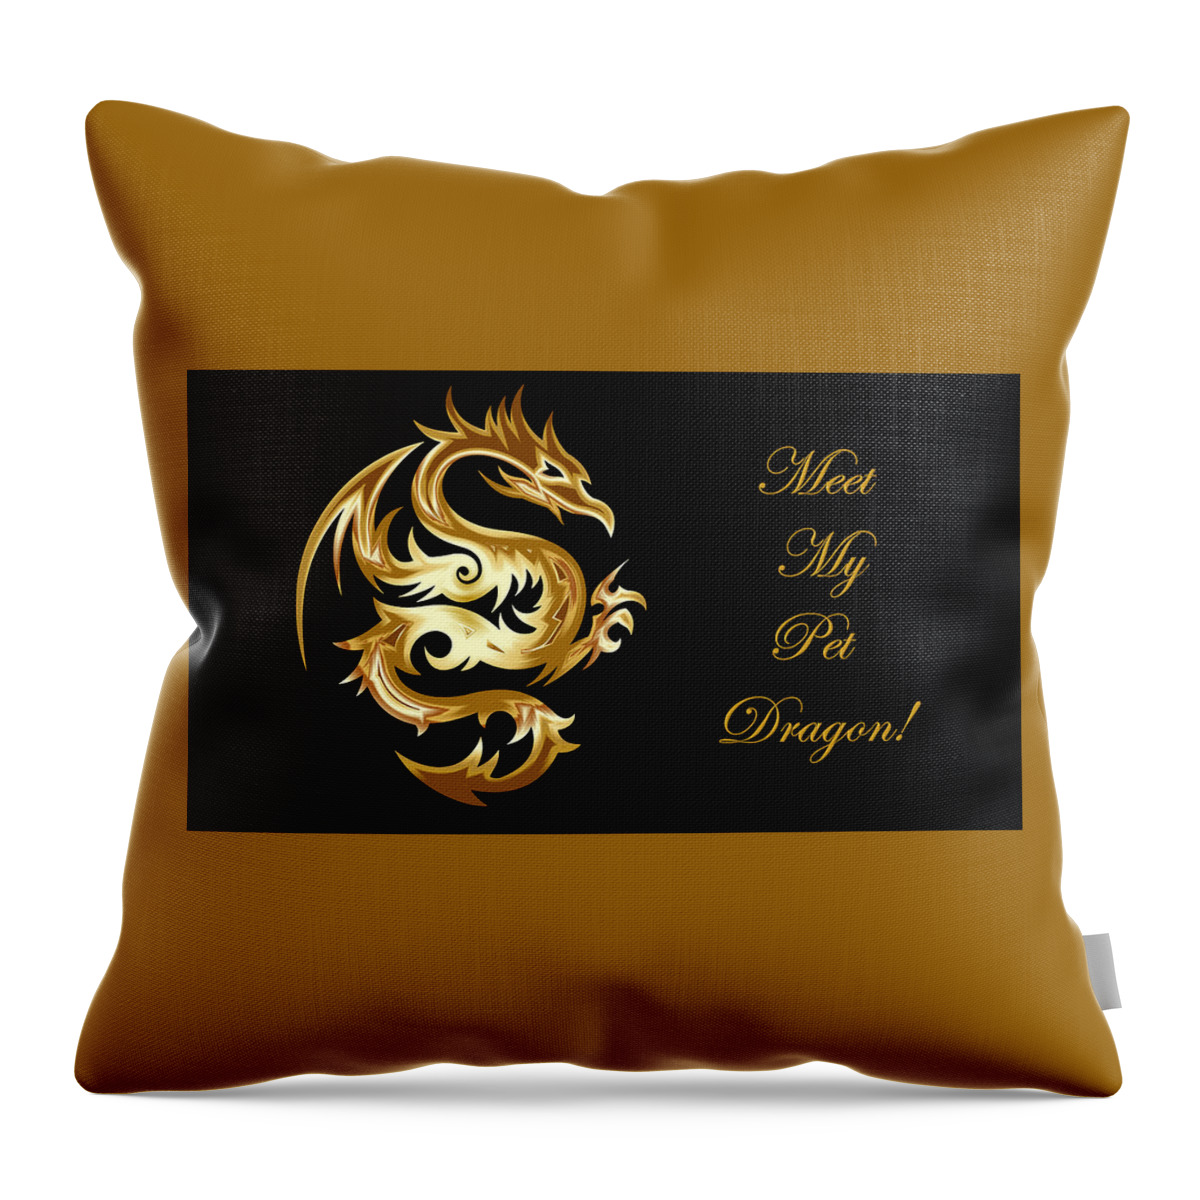 Dragon Throw Pillow featuring the photograph Meet My Pet Dragon by Nancy Ayanna Wyatt and Gordon Johnson